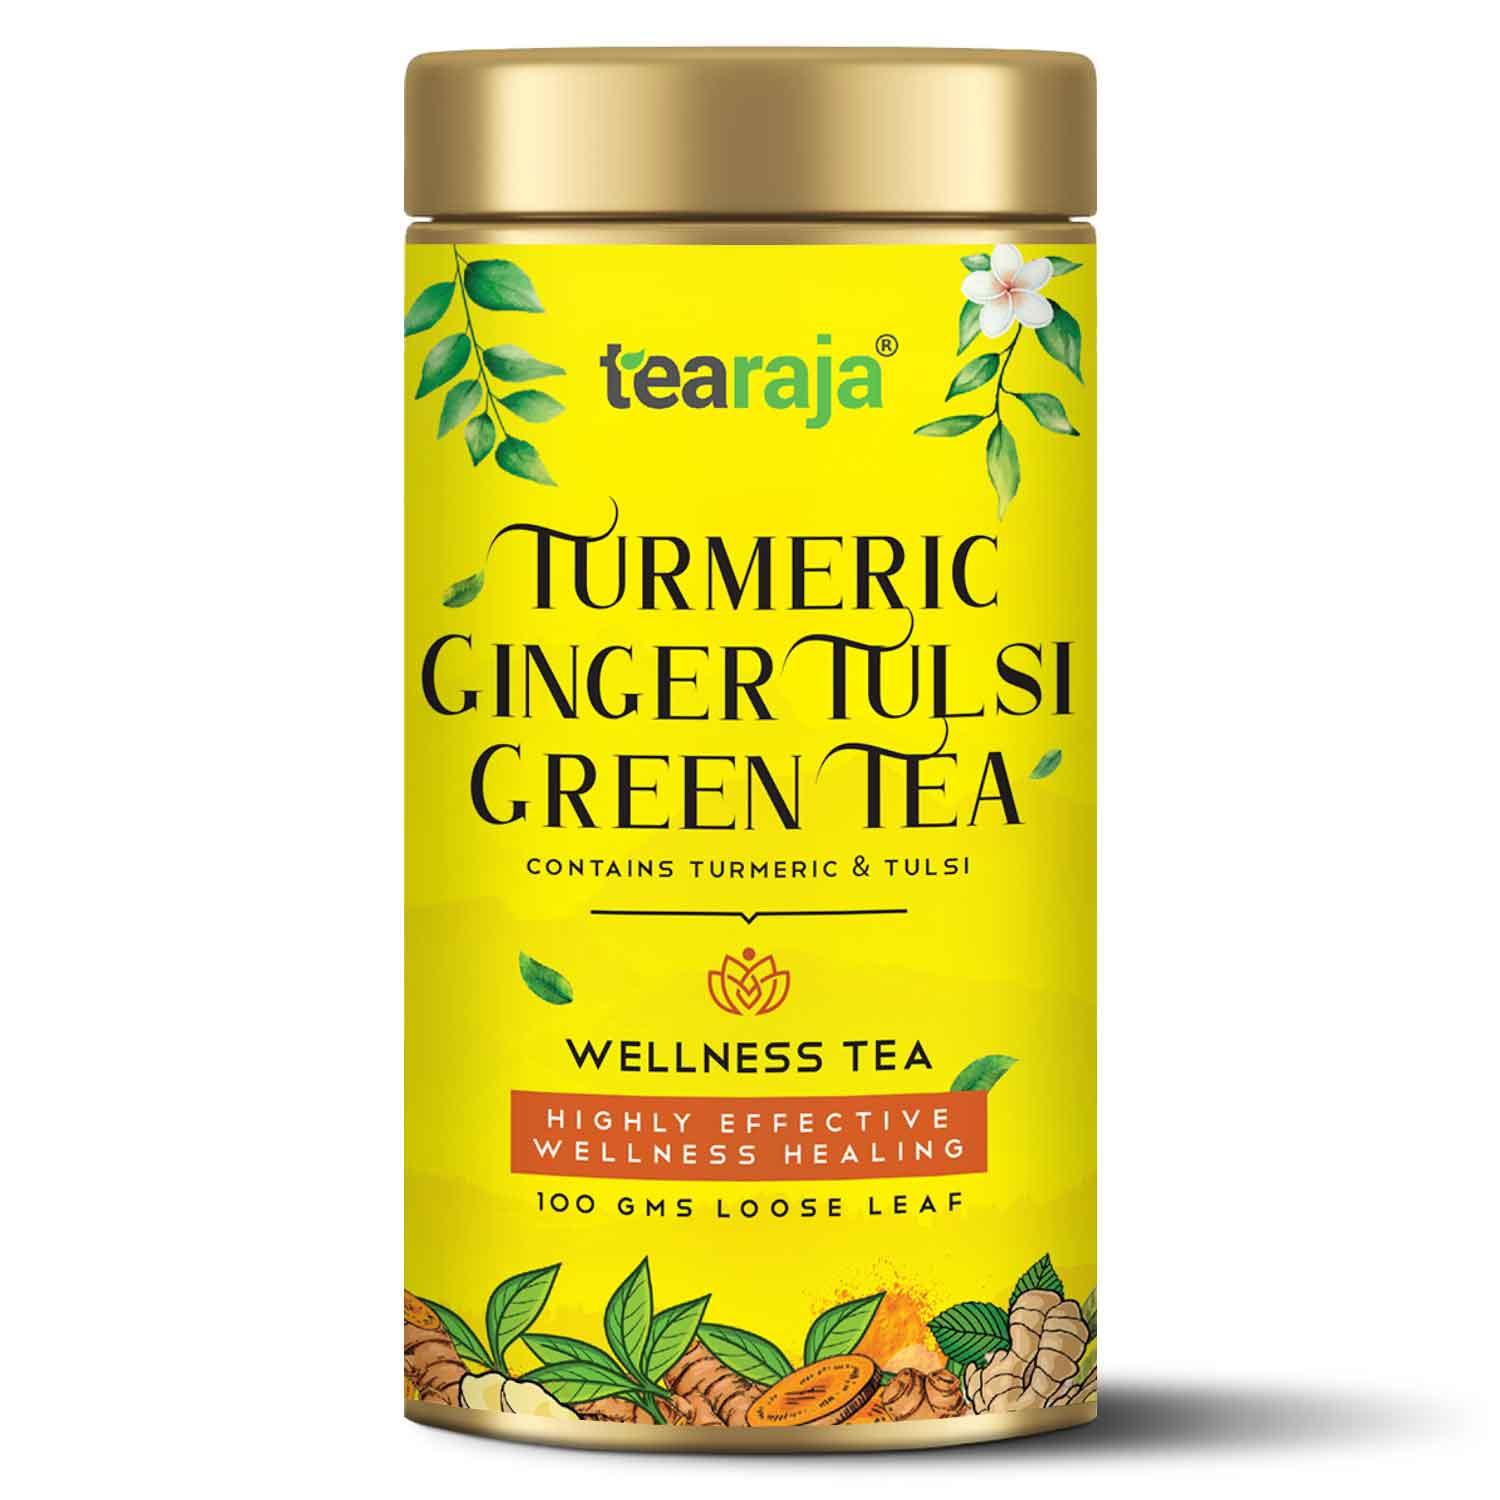 Turmeric Ginger Tulsi Green Tea - Tearaja